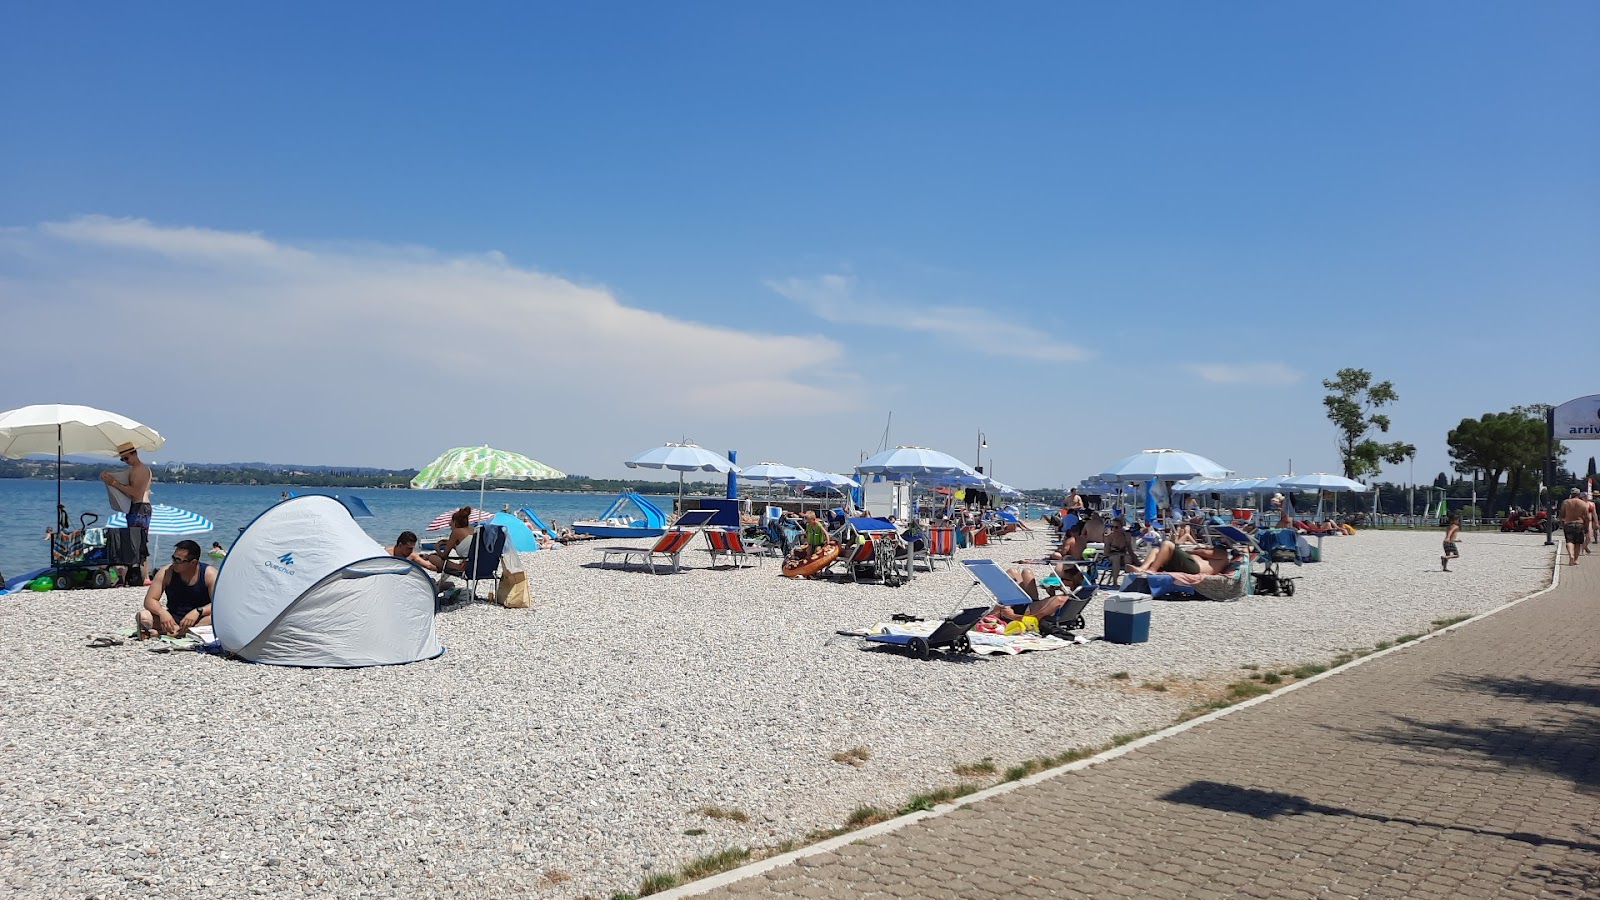 Foto de Spiaggia Bergamini con muy limpio nivel de limpieza